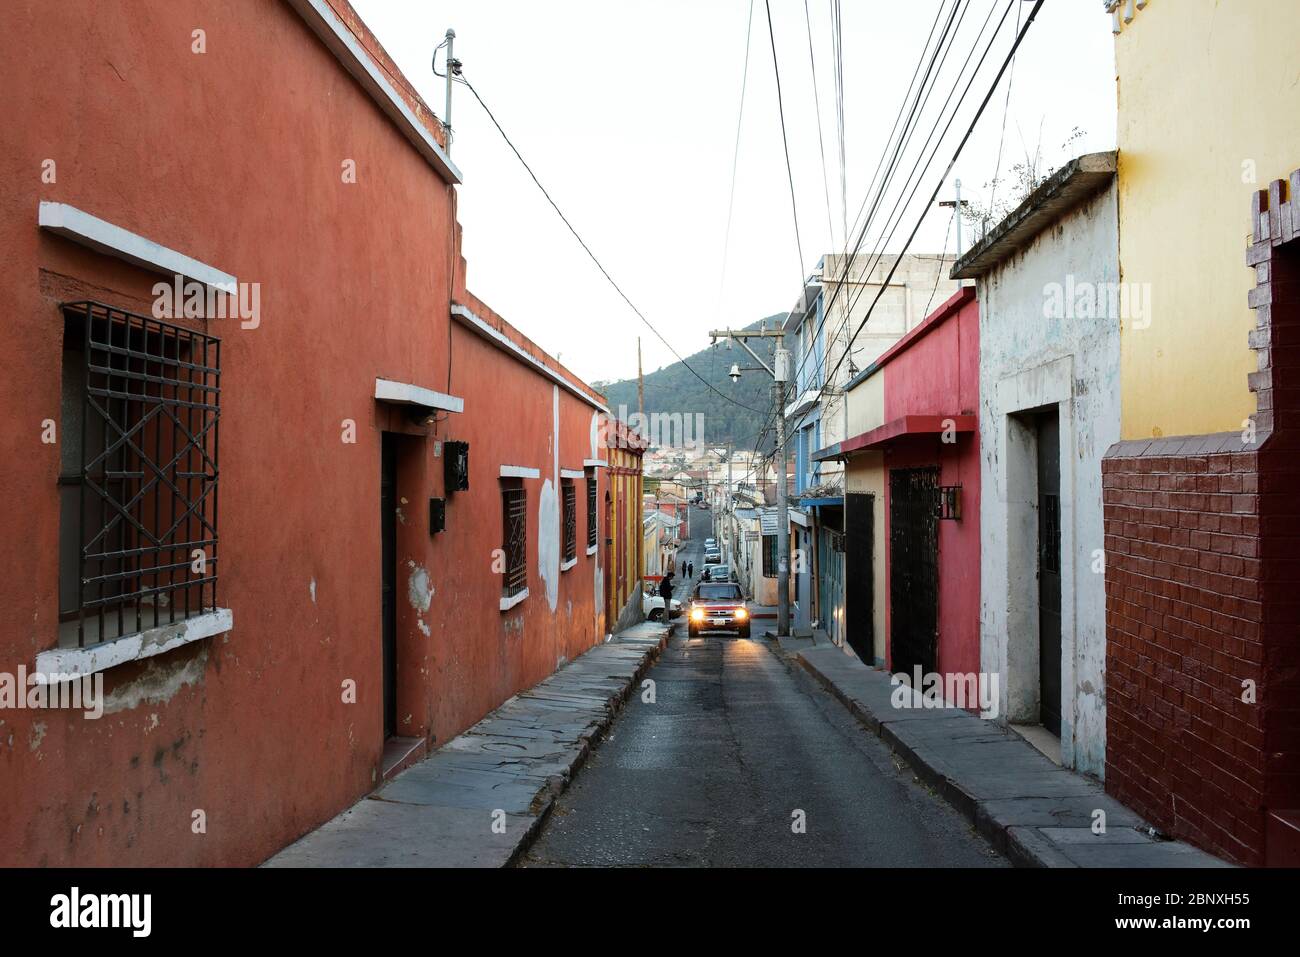 Narrow, hilly street with colourful residential houses in central Quetzaltenango (Xela), Guatemala. Mar 2019 Stock Photo